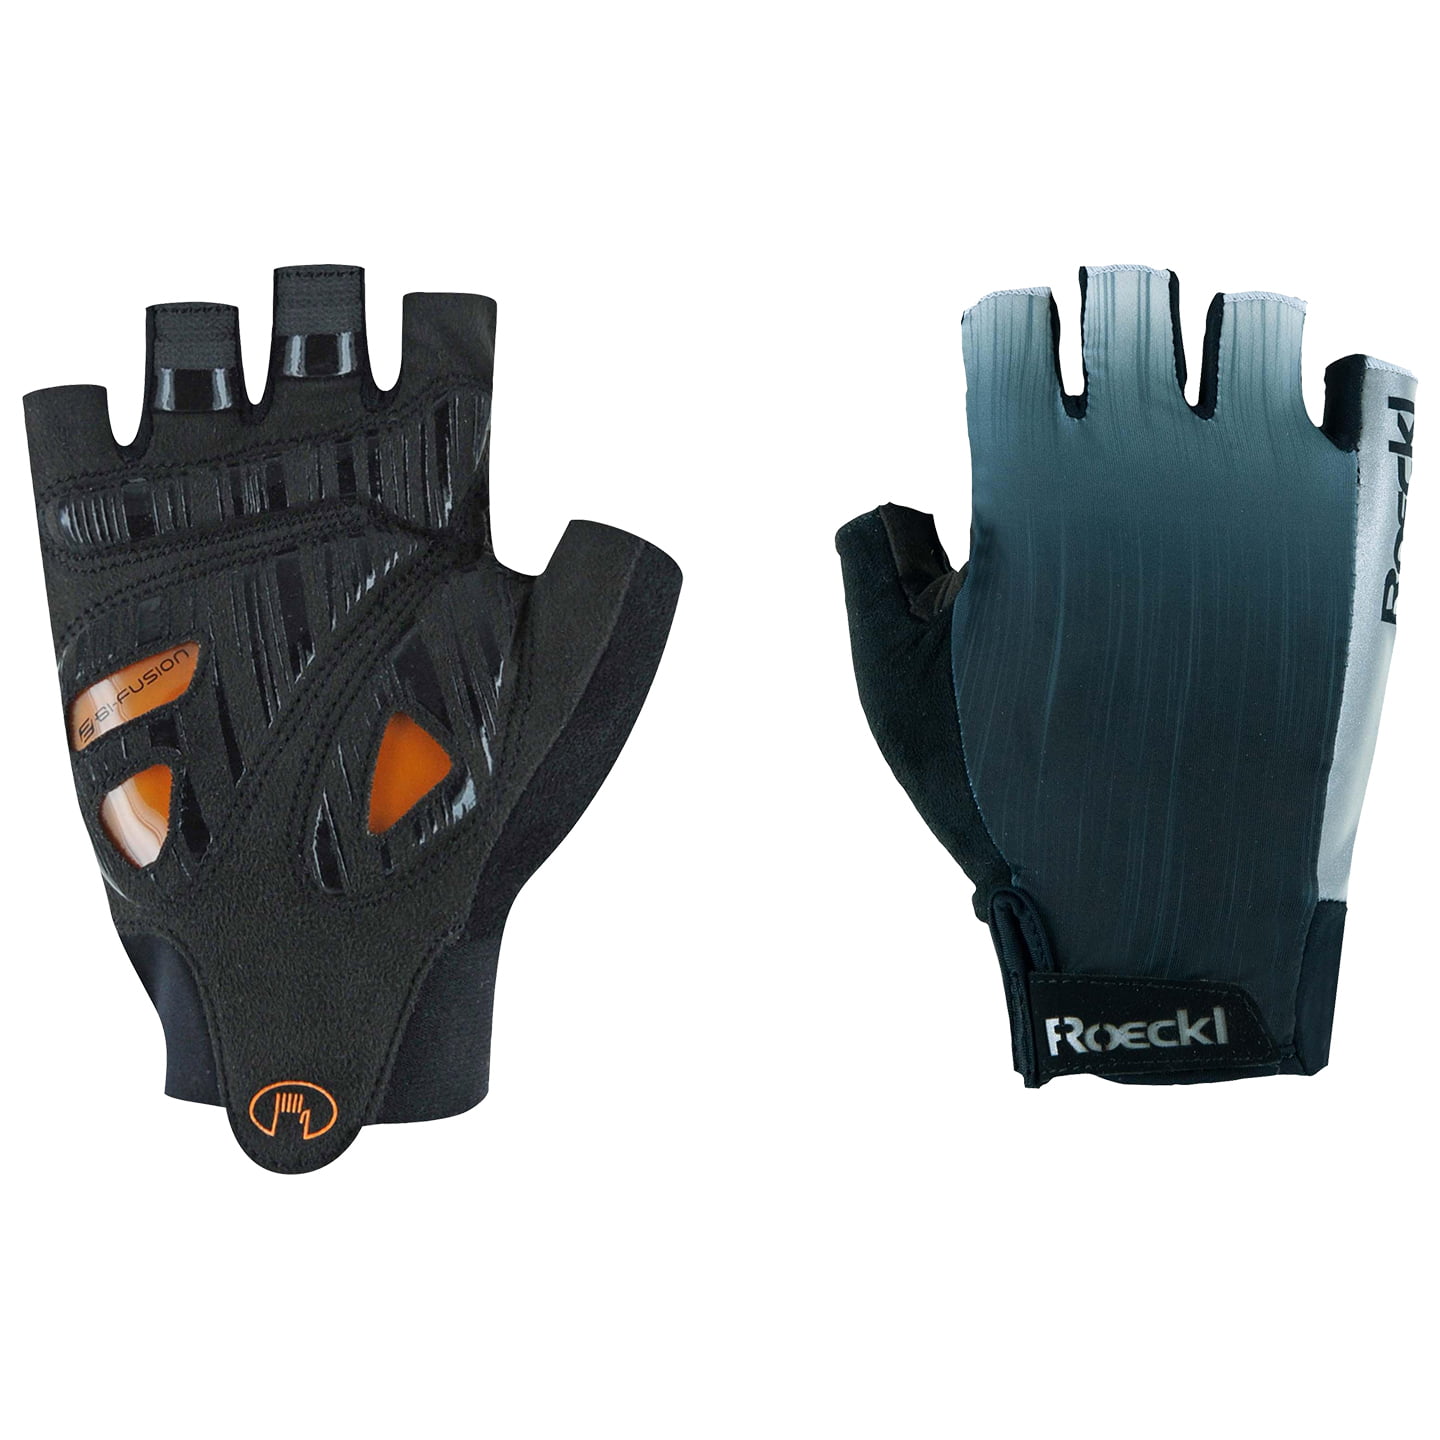 ROECKL Illasi MTB Gloves Cycling Gloves, for men, size 10,5, Bike gloves, Bike clothing